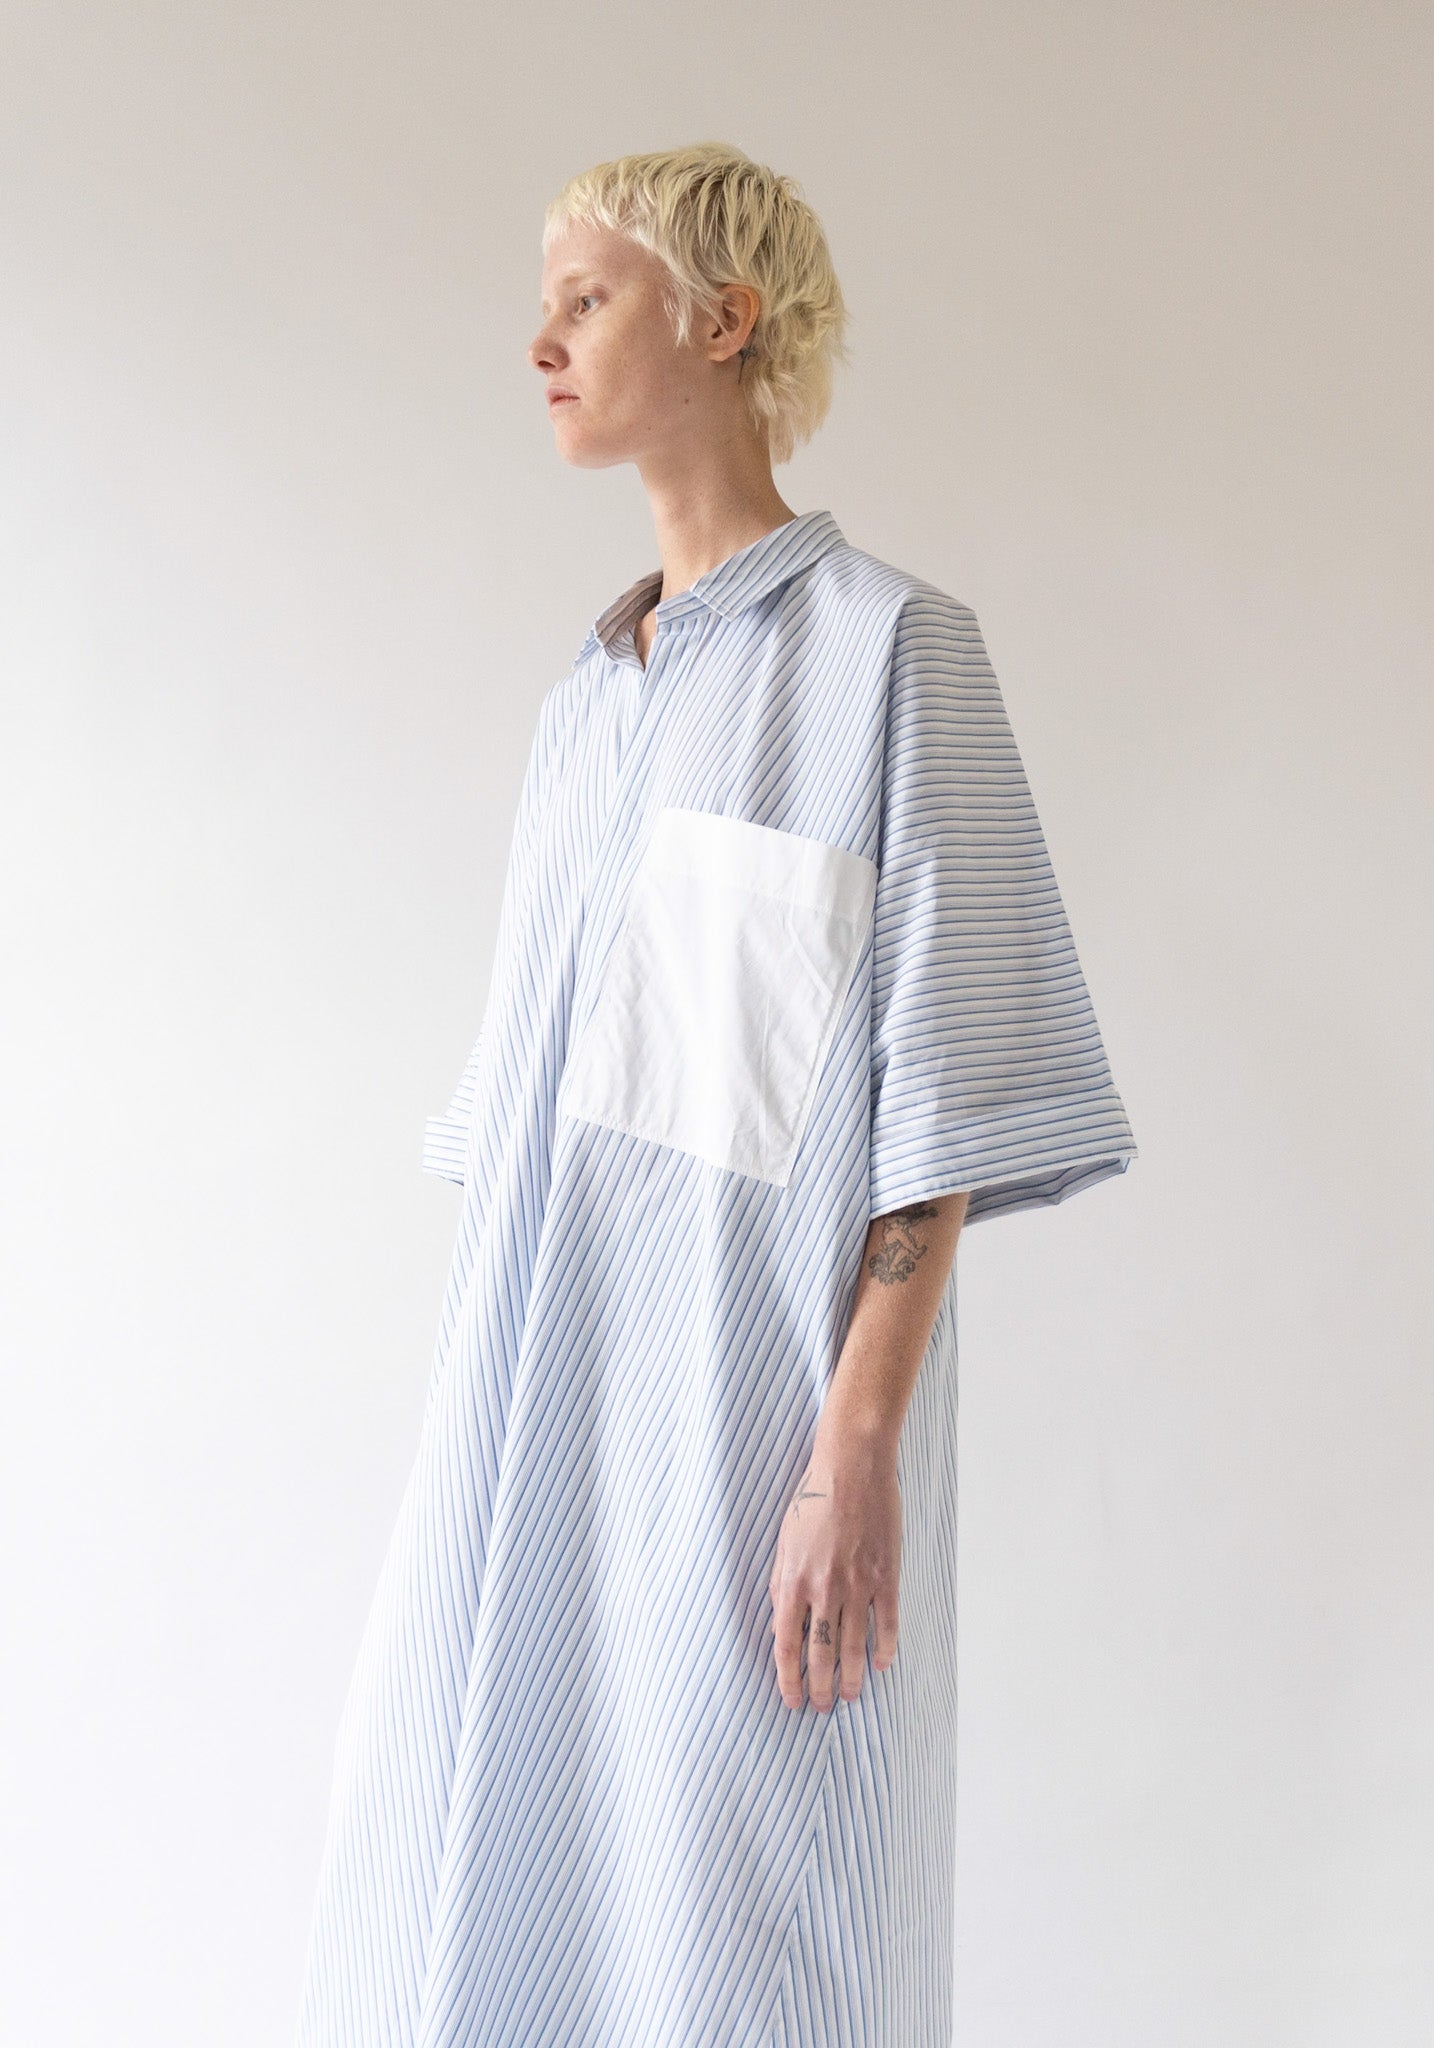 Doris Dress in Blue/White Stripe